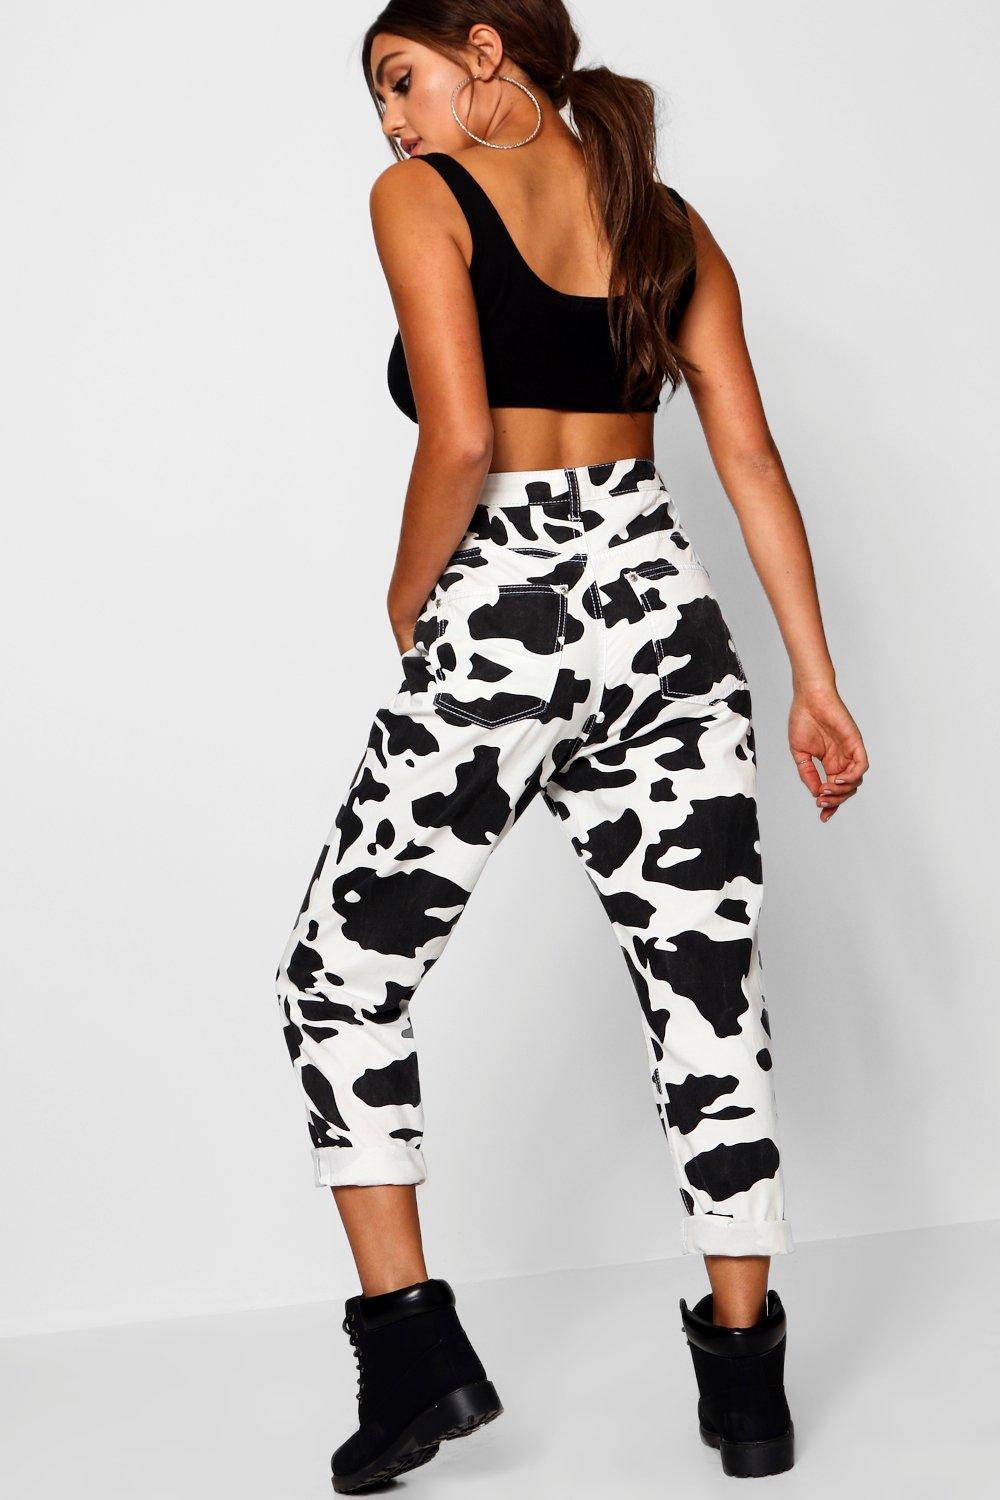 cow print jean shorts